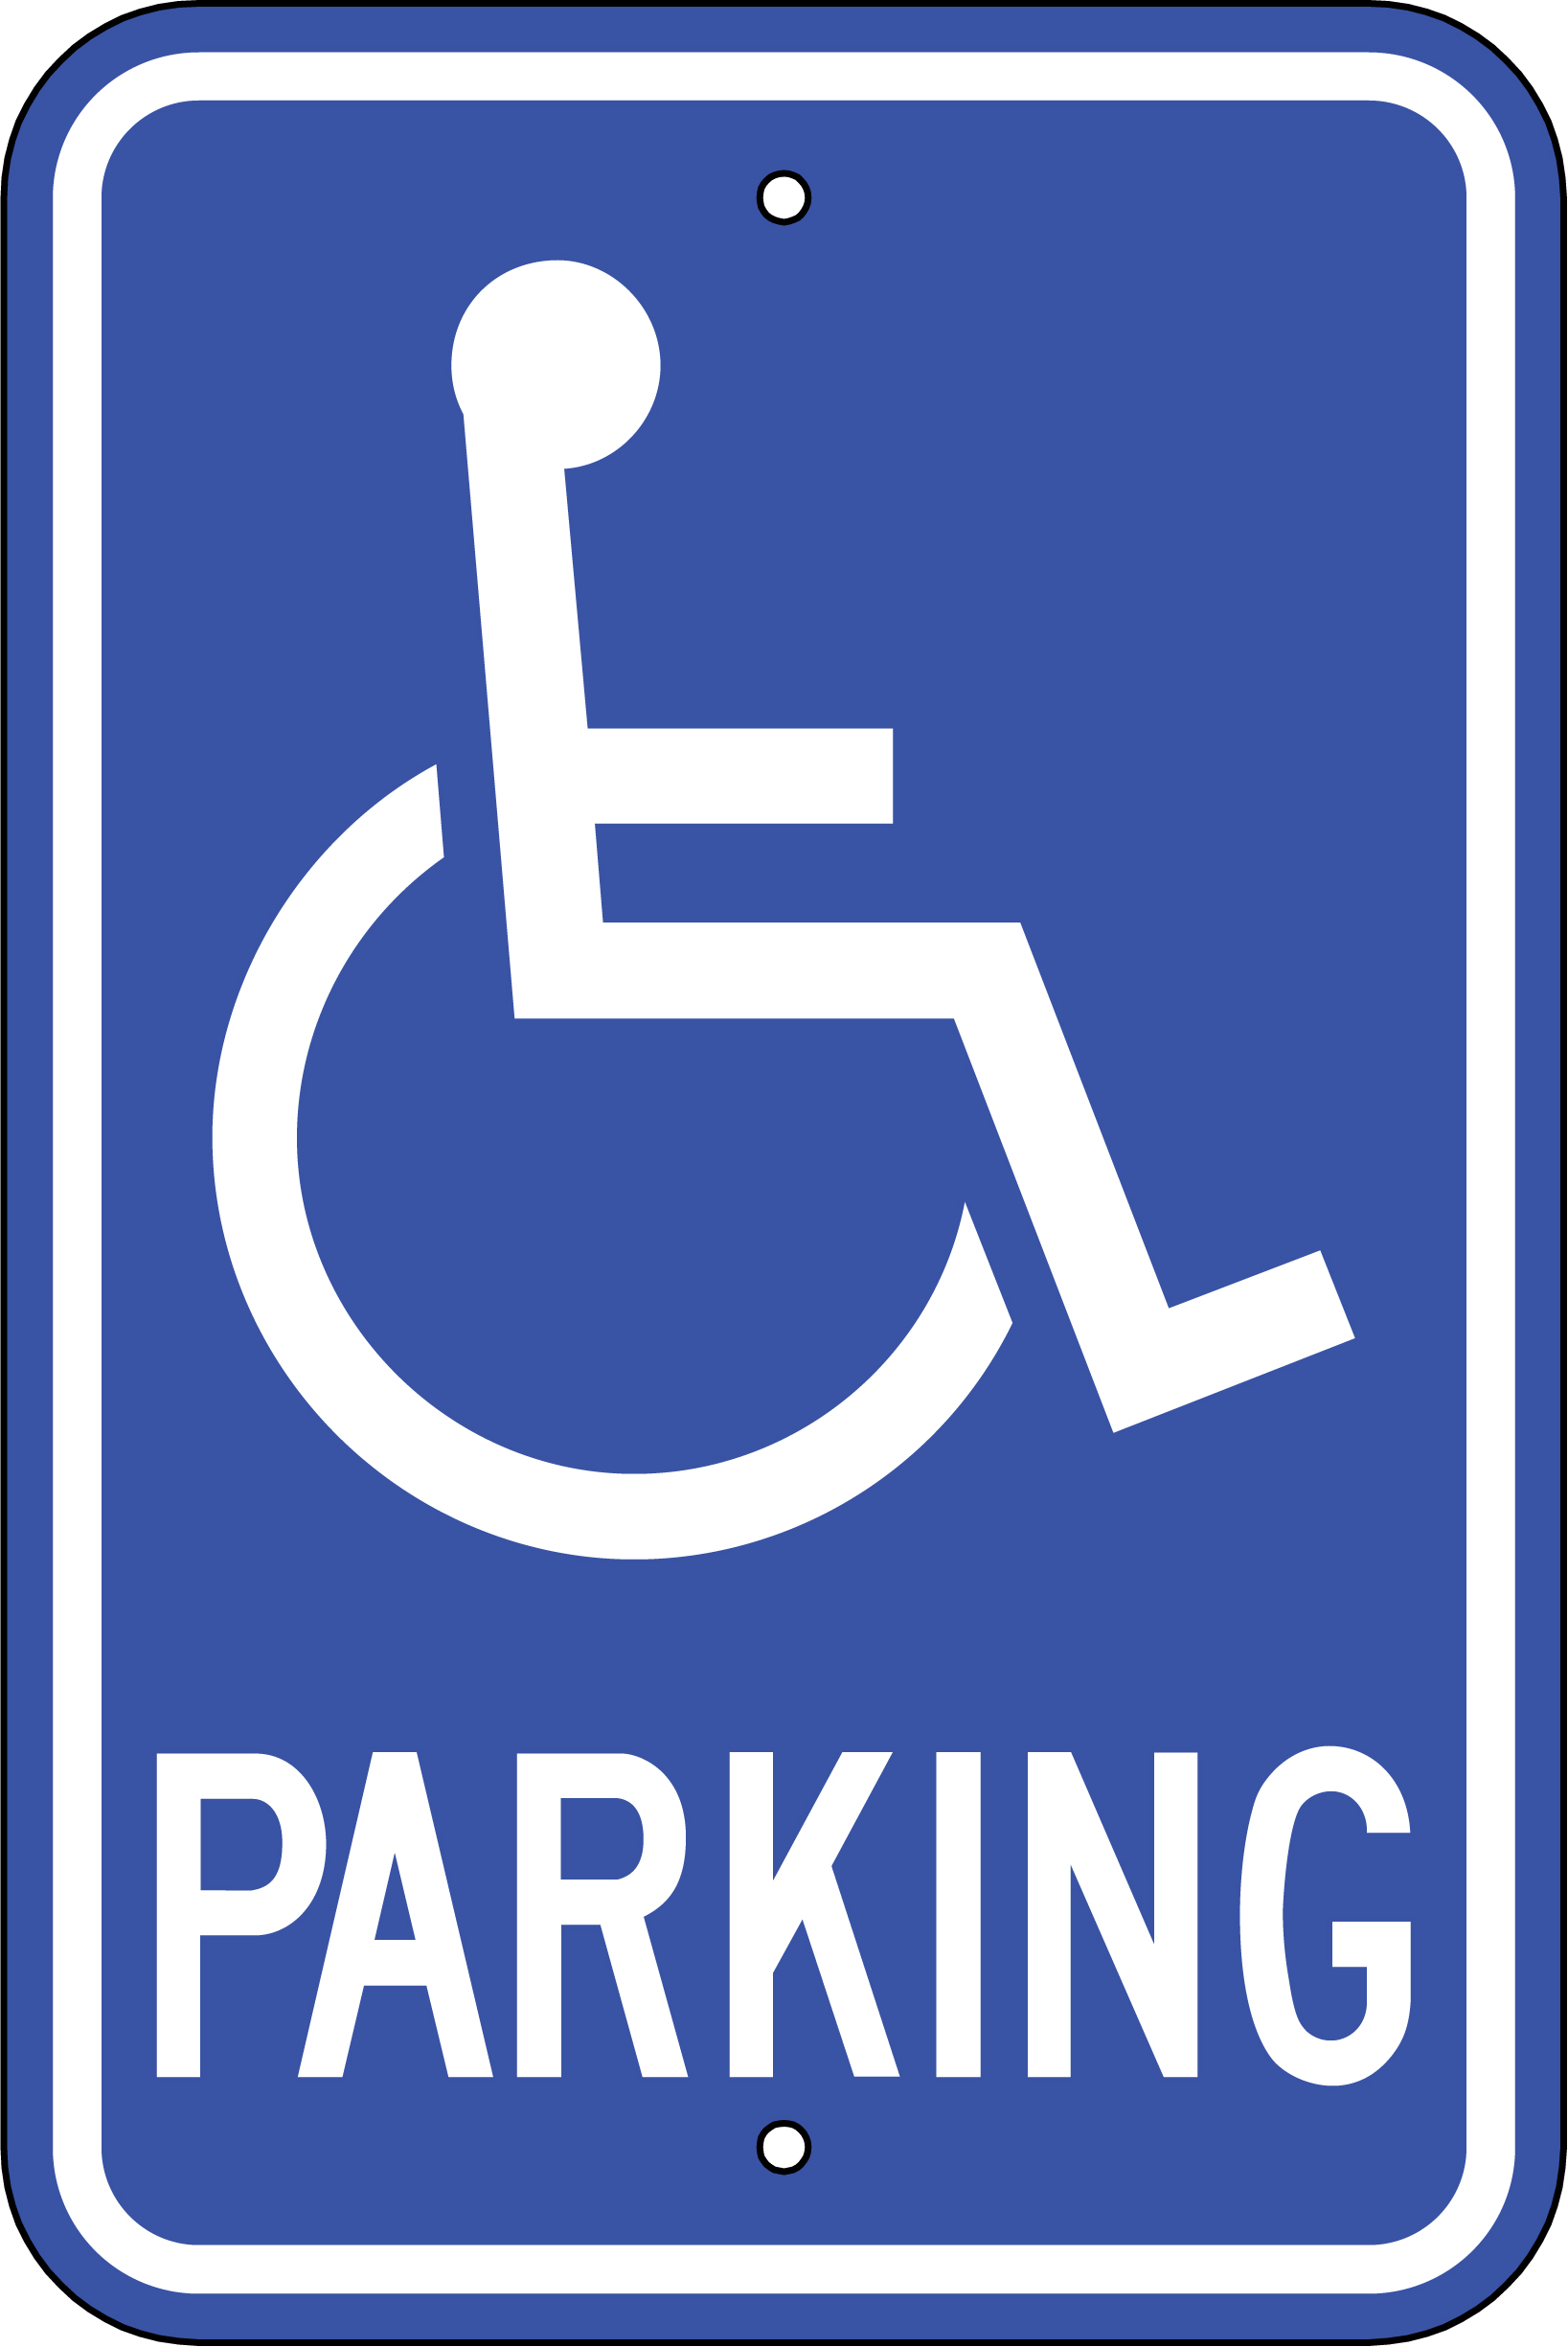 Free Printable Handicap Parking Signs, Download Free Printable Handicap